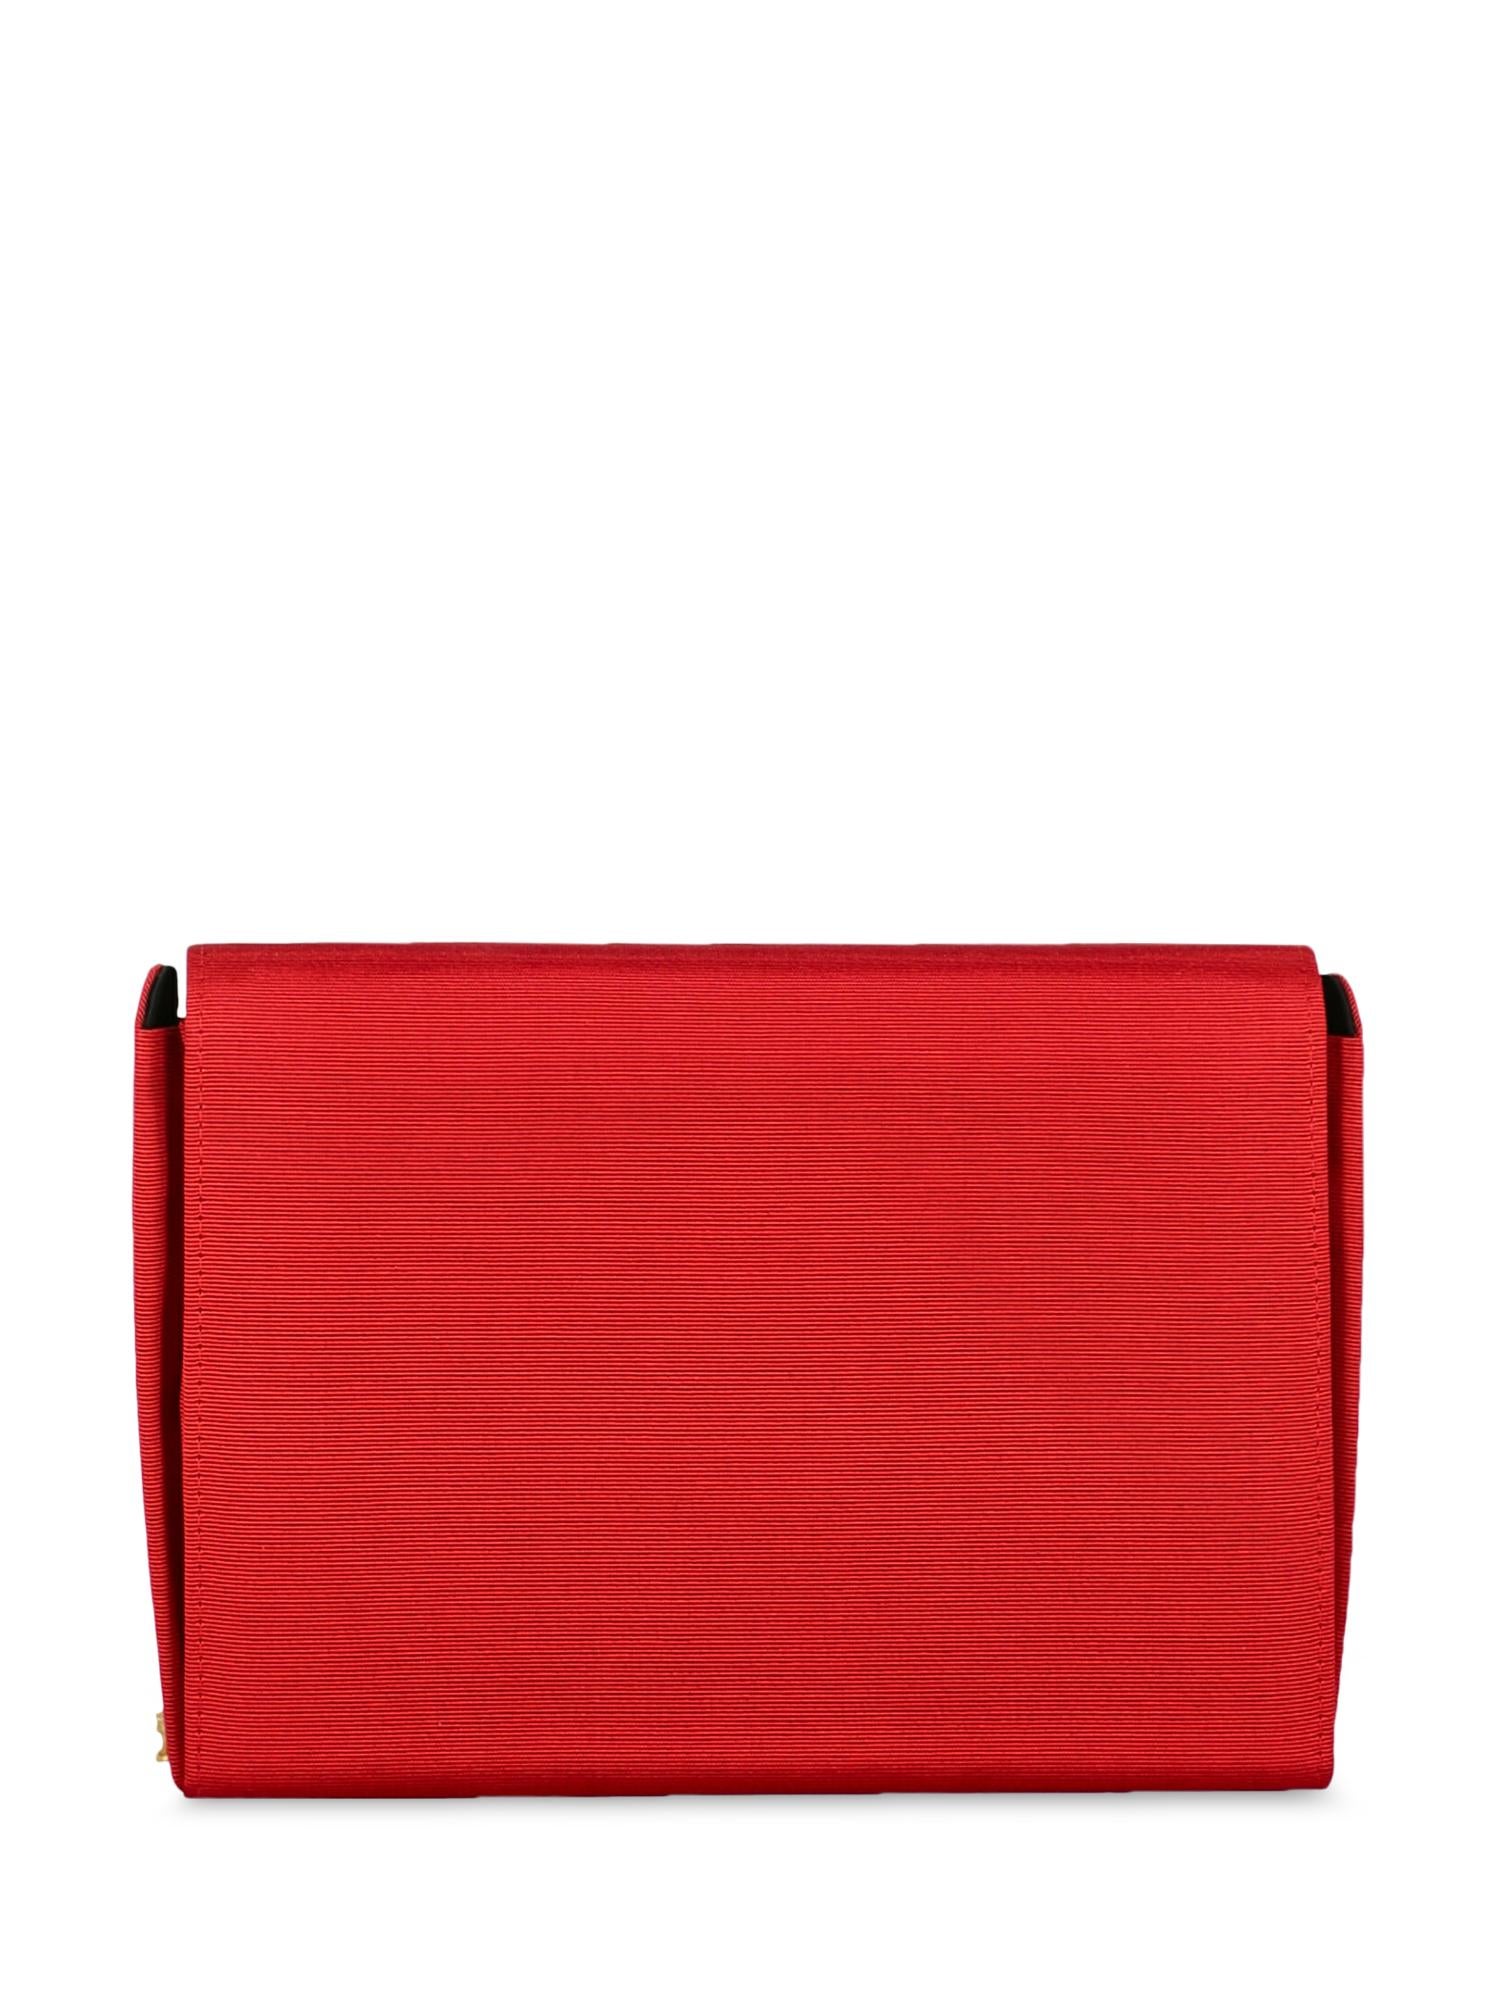 Women's Nina Ricci  Women   Shoulder bags   Red Fabric  For Sale